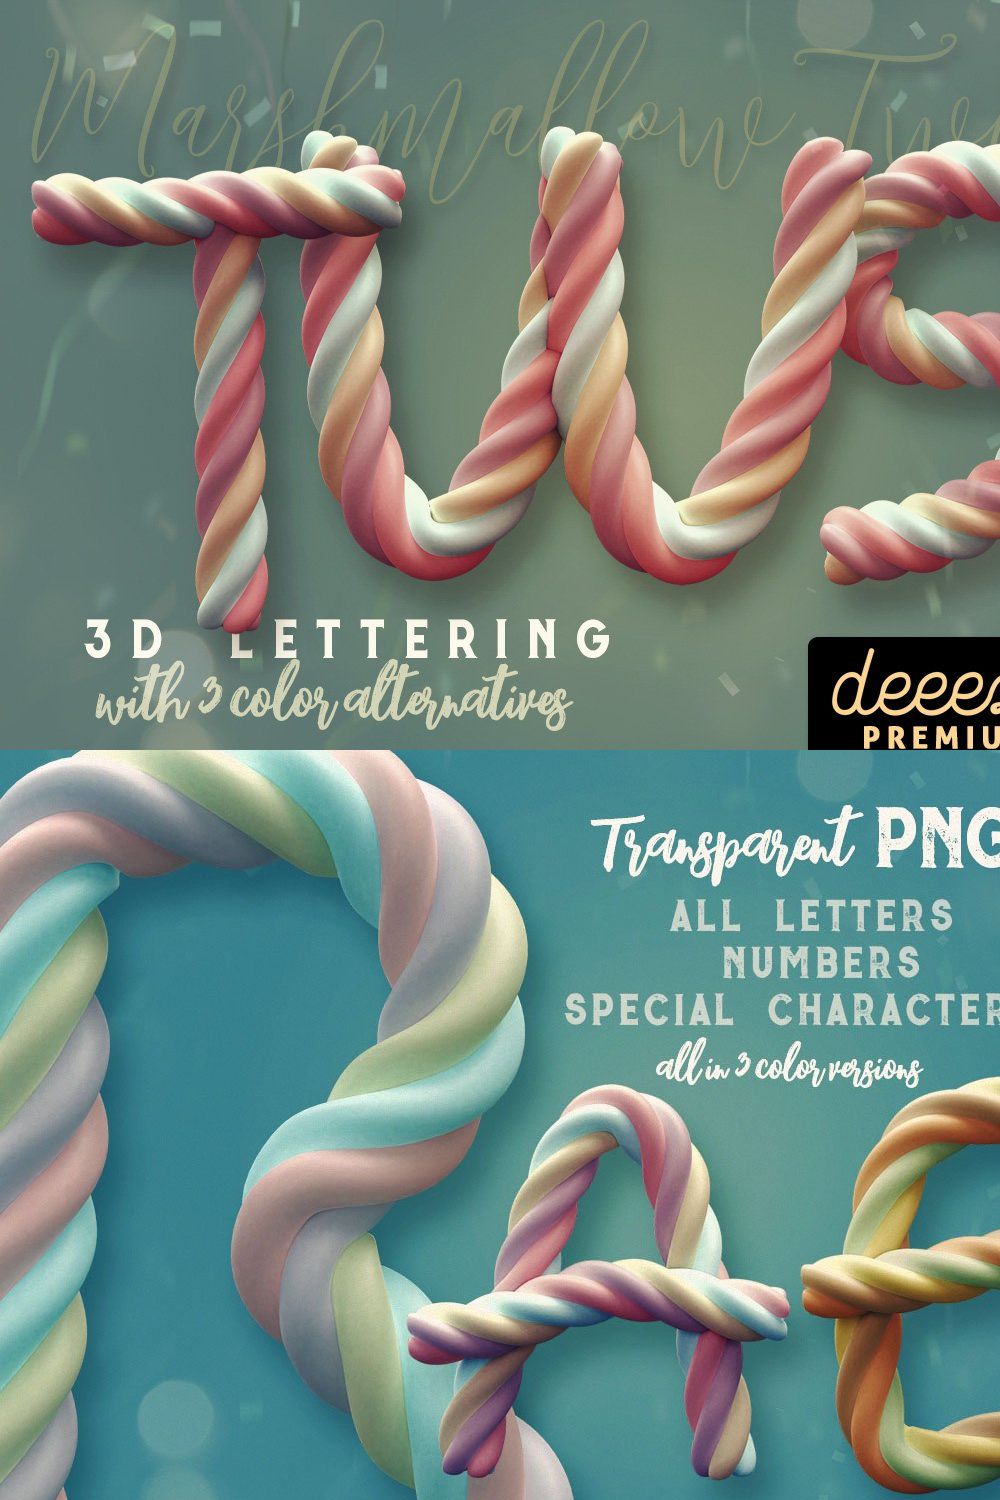 Marshmallow Twist - 3D Lettering pinterest preview image.